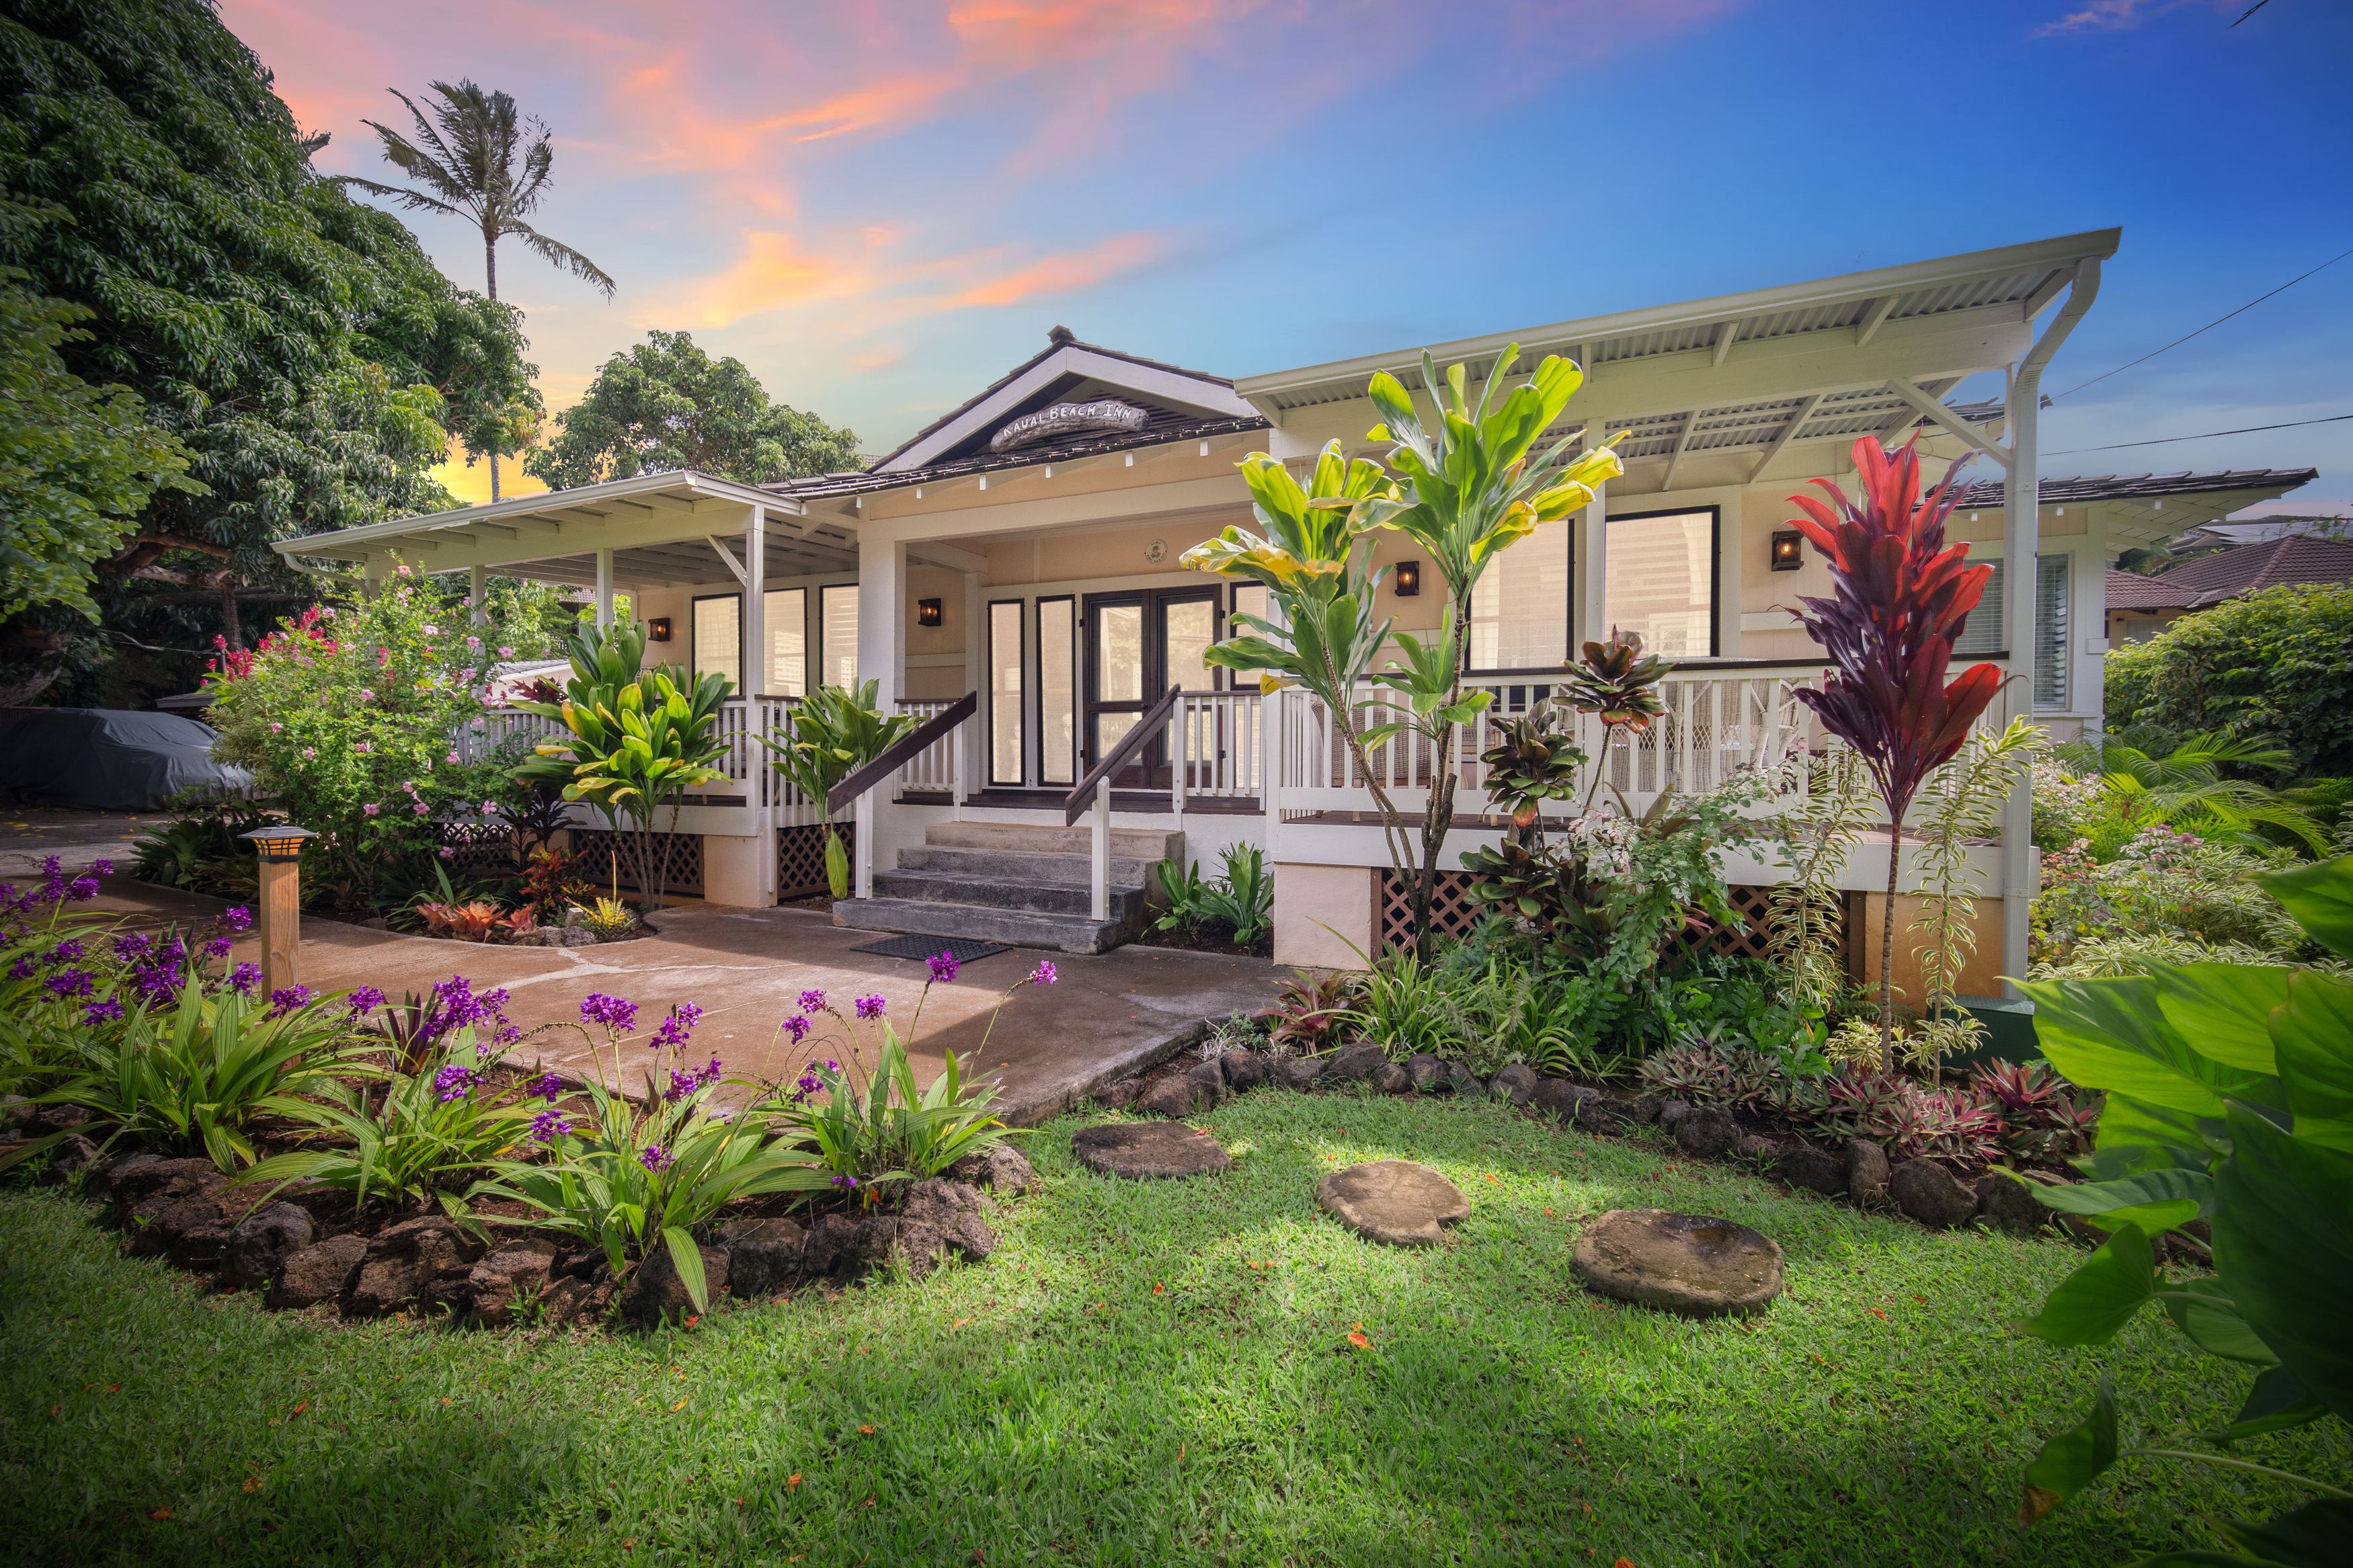 Come and experience the magic of The Aloha House in Kauai